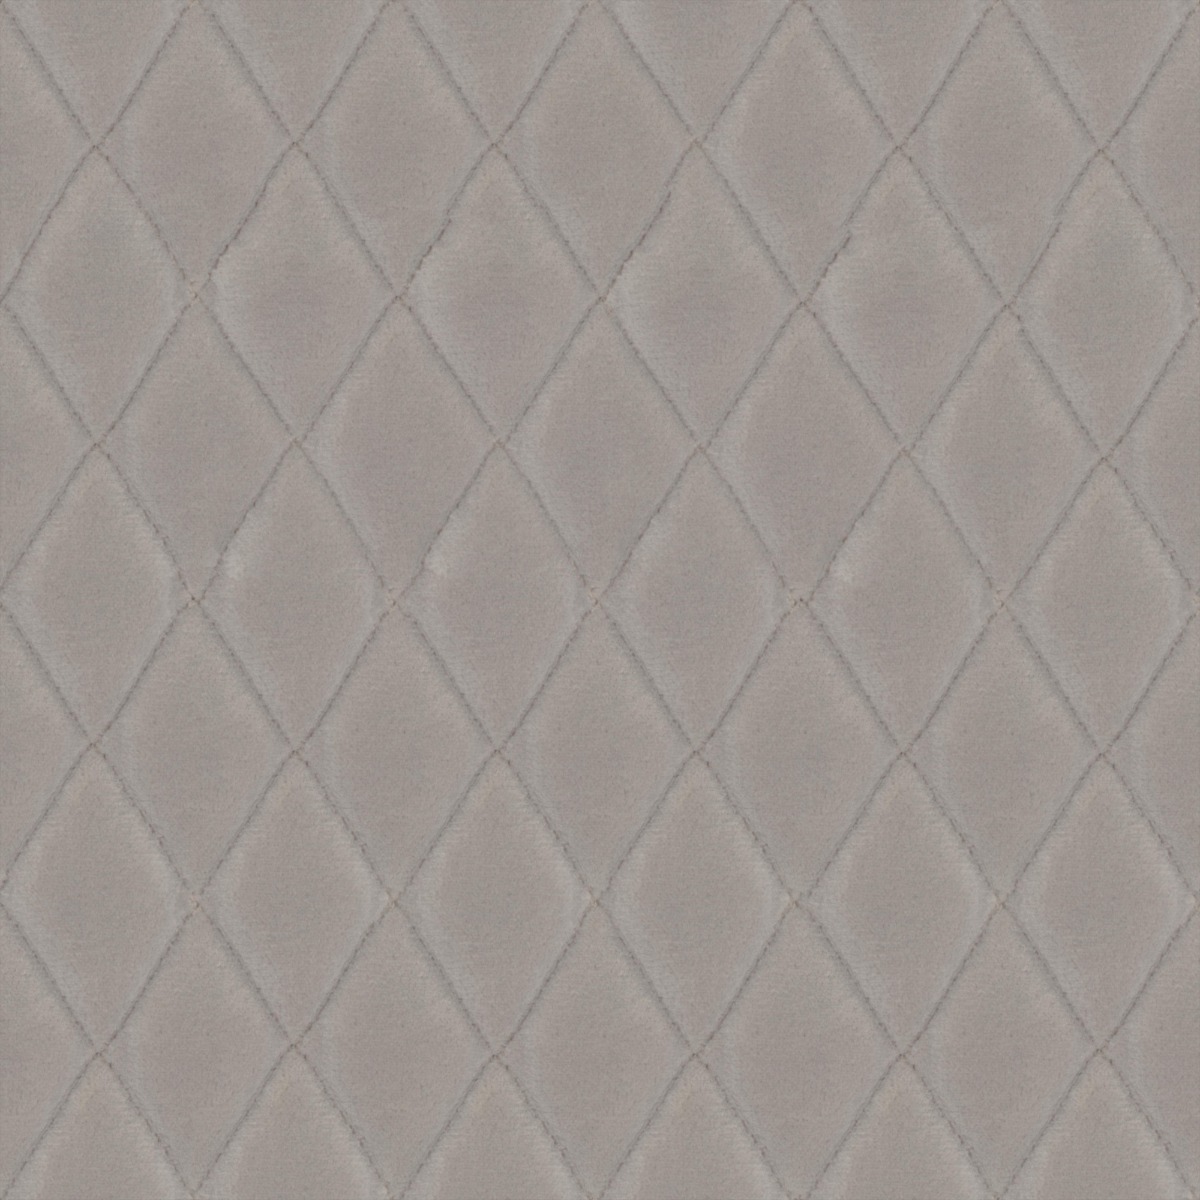 grey fabric pattern